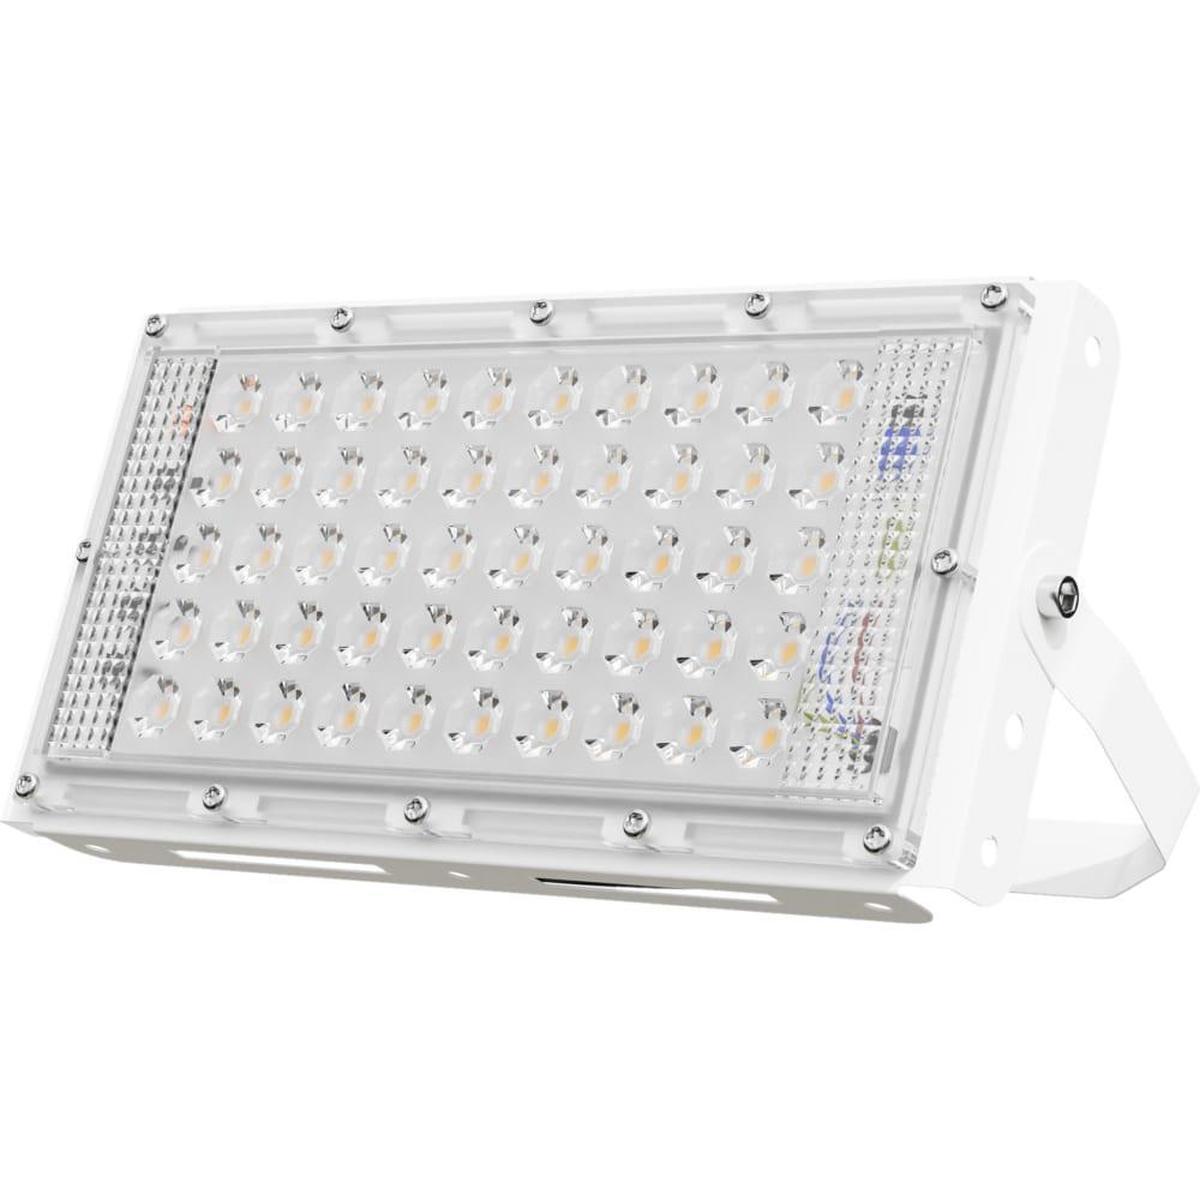 05-20, Прожектор LED, 30Вт, 220В, 2100Лм, IP65, 6400К (cold white)